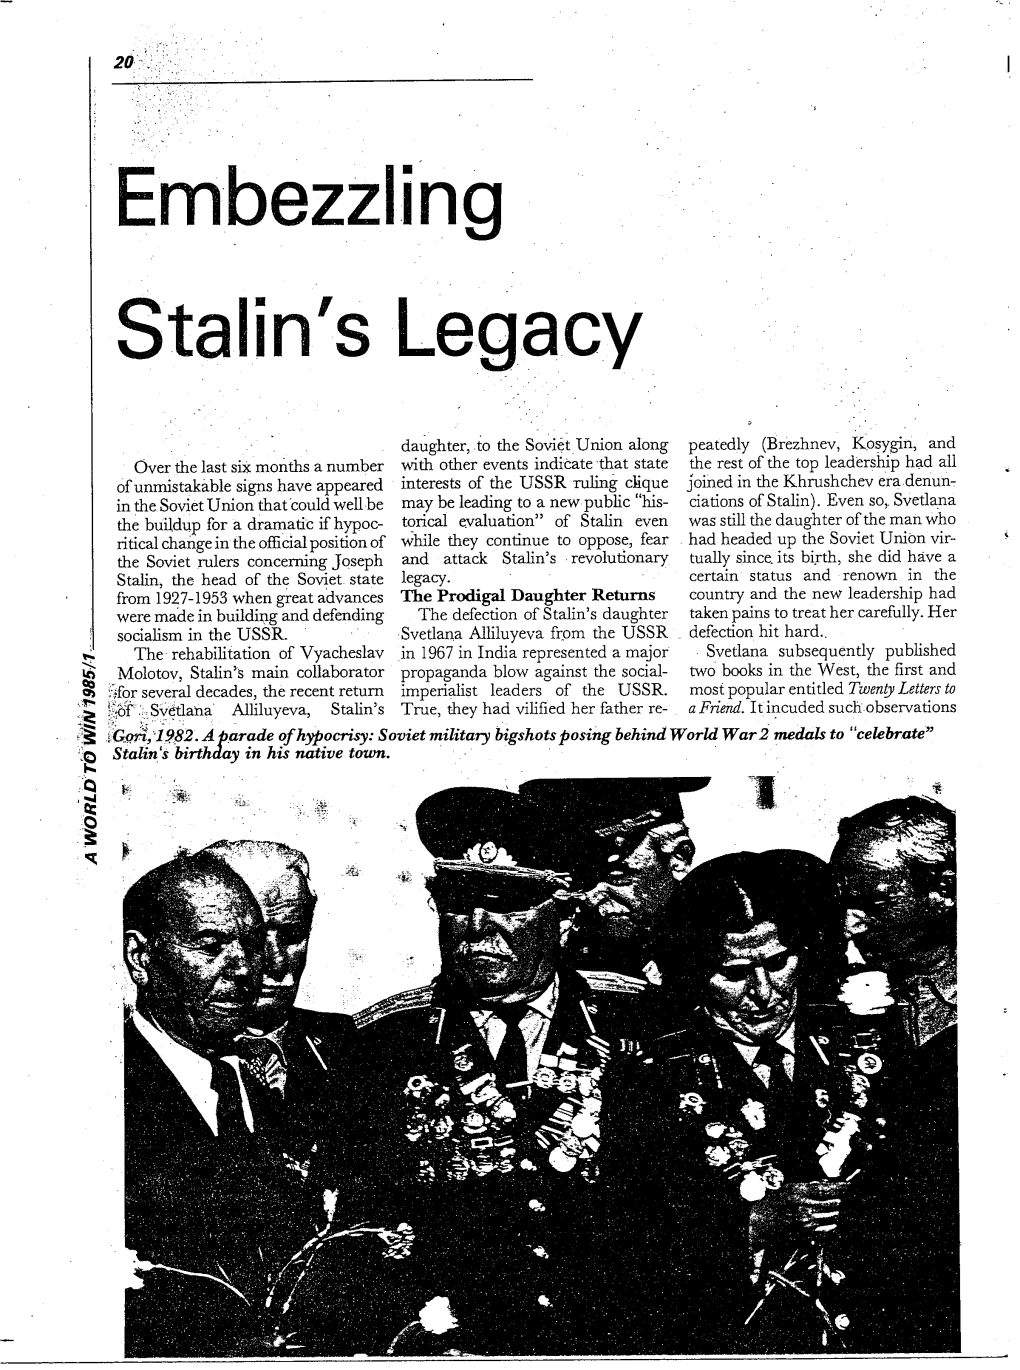 Embezzling Stalin's Legacy